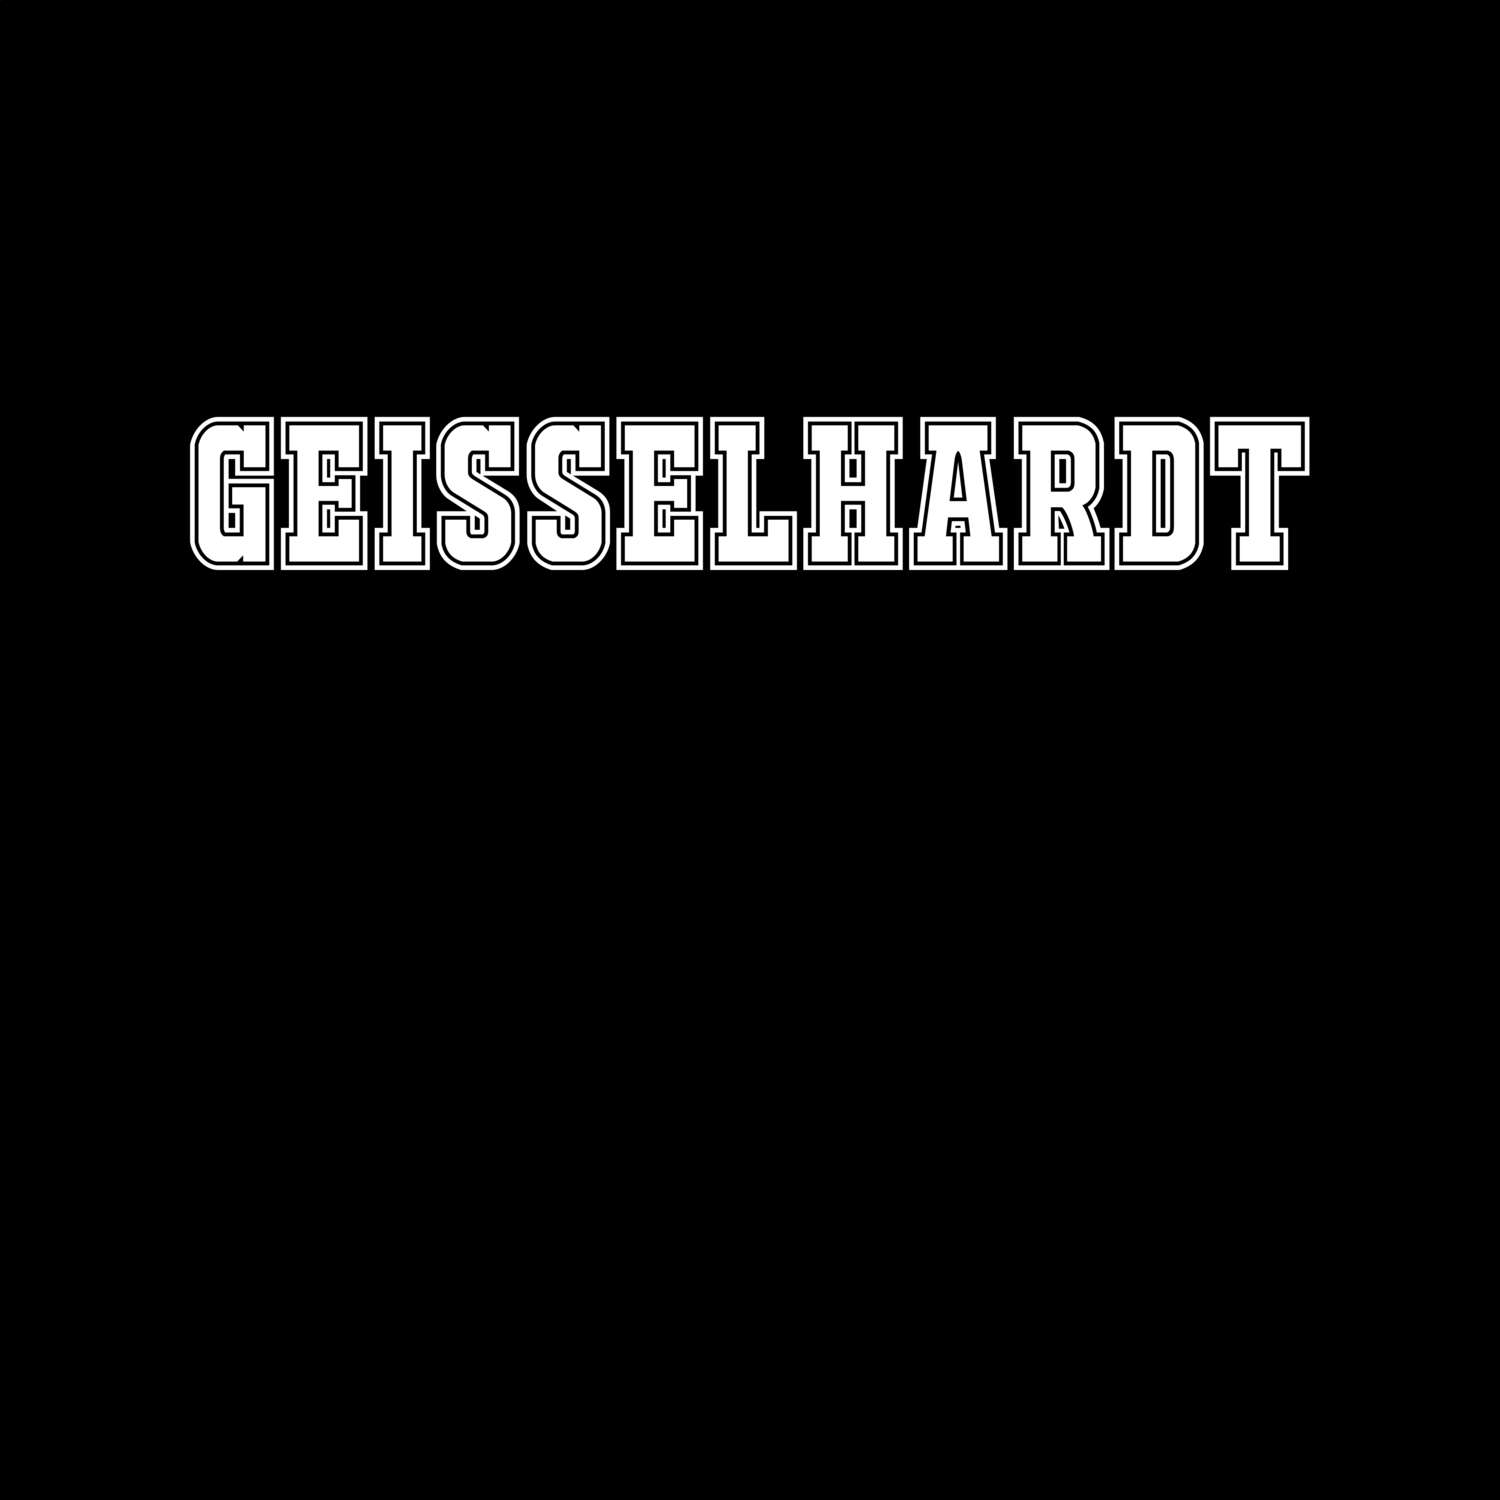 Geißelhardt T-Shirt »Classic«